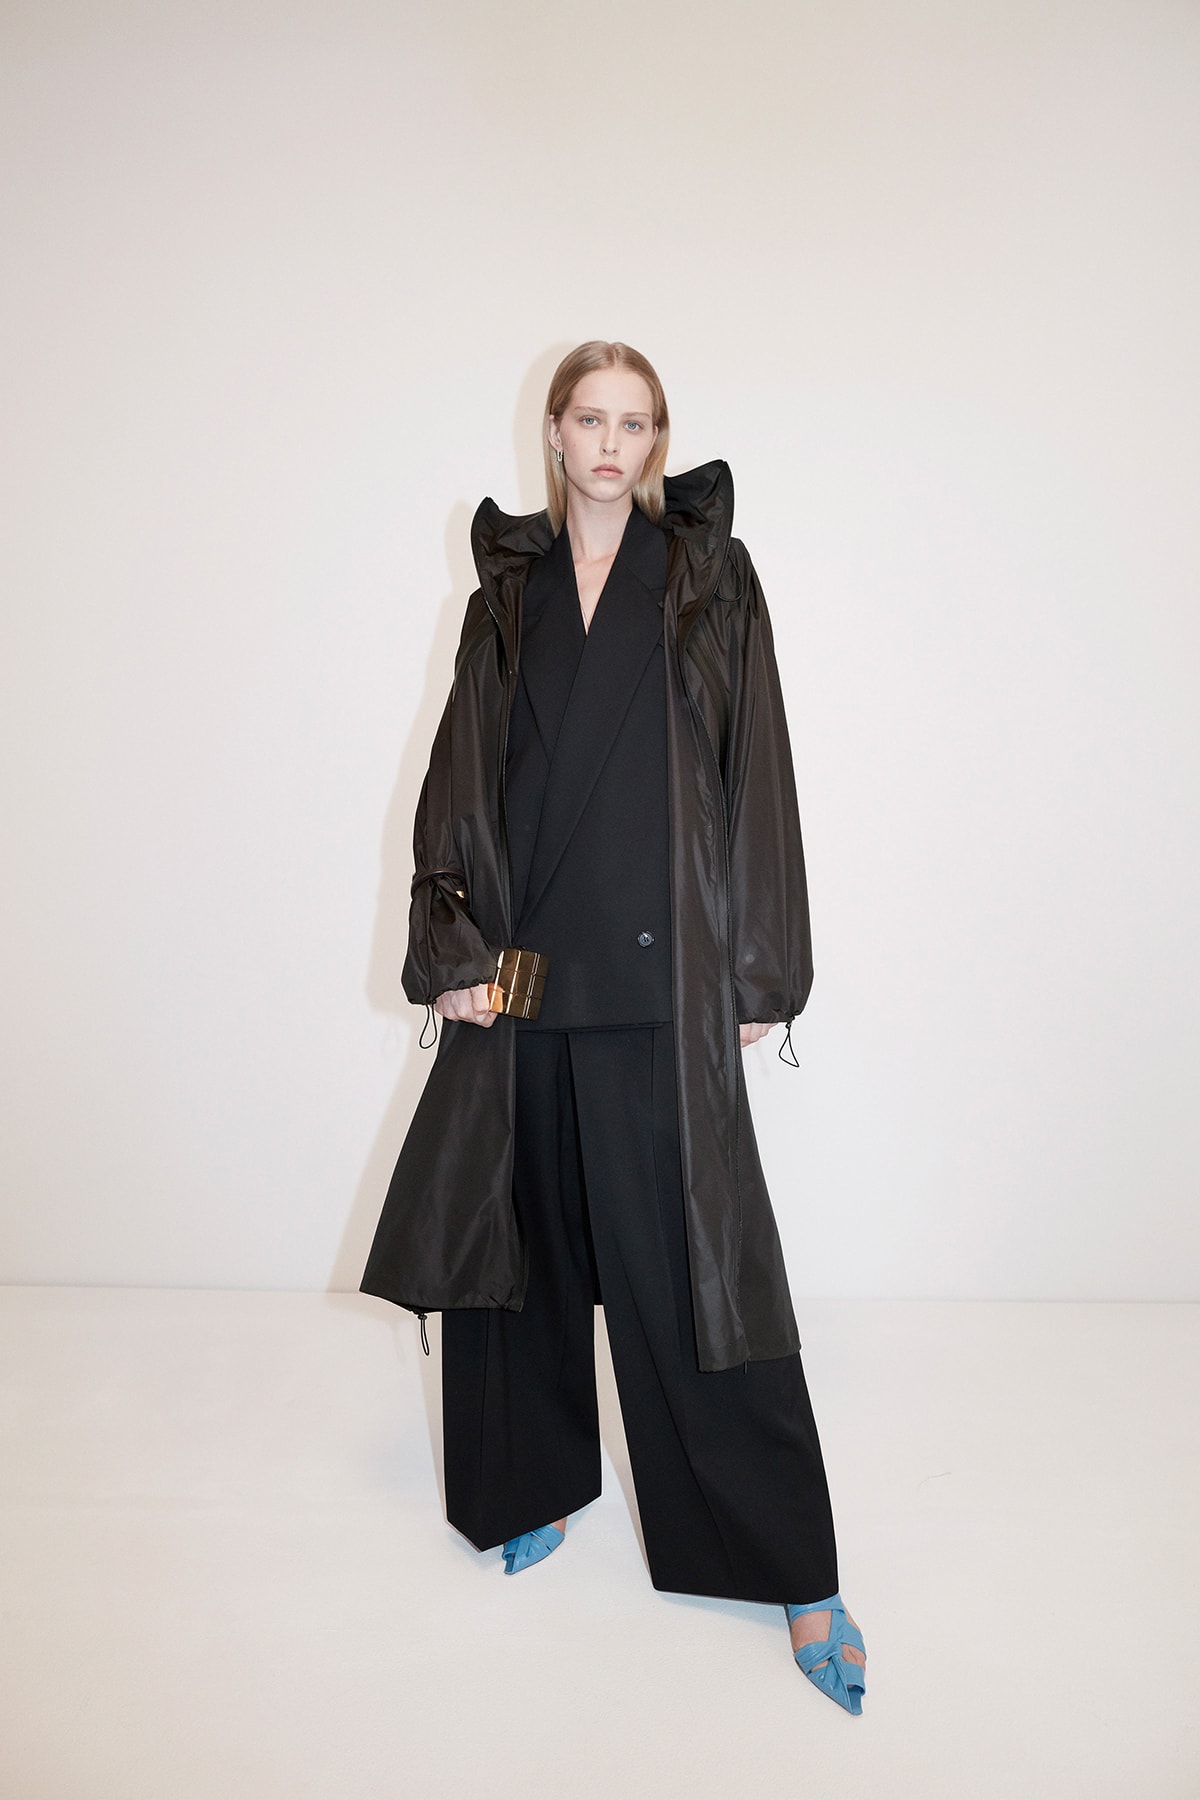 Bottega Veneta Pre-Fall 2020 Collection Lookbook Suit Black